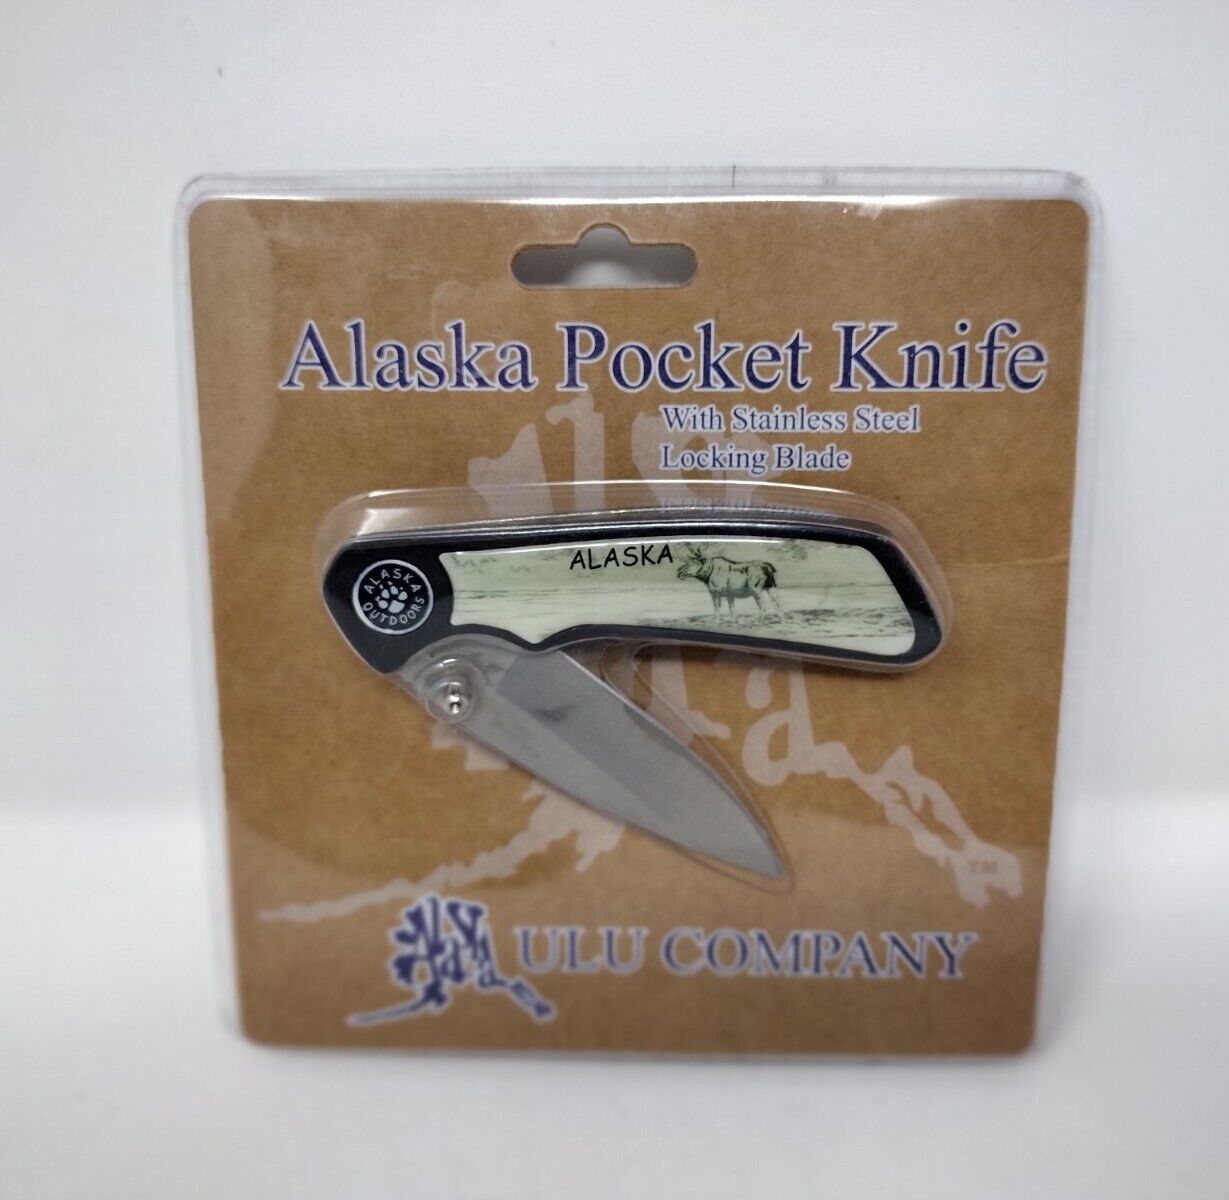 NEW ULU COMPANY Alaska Pocket Knife Stainless Steel Locking Blade Moose 